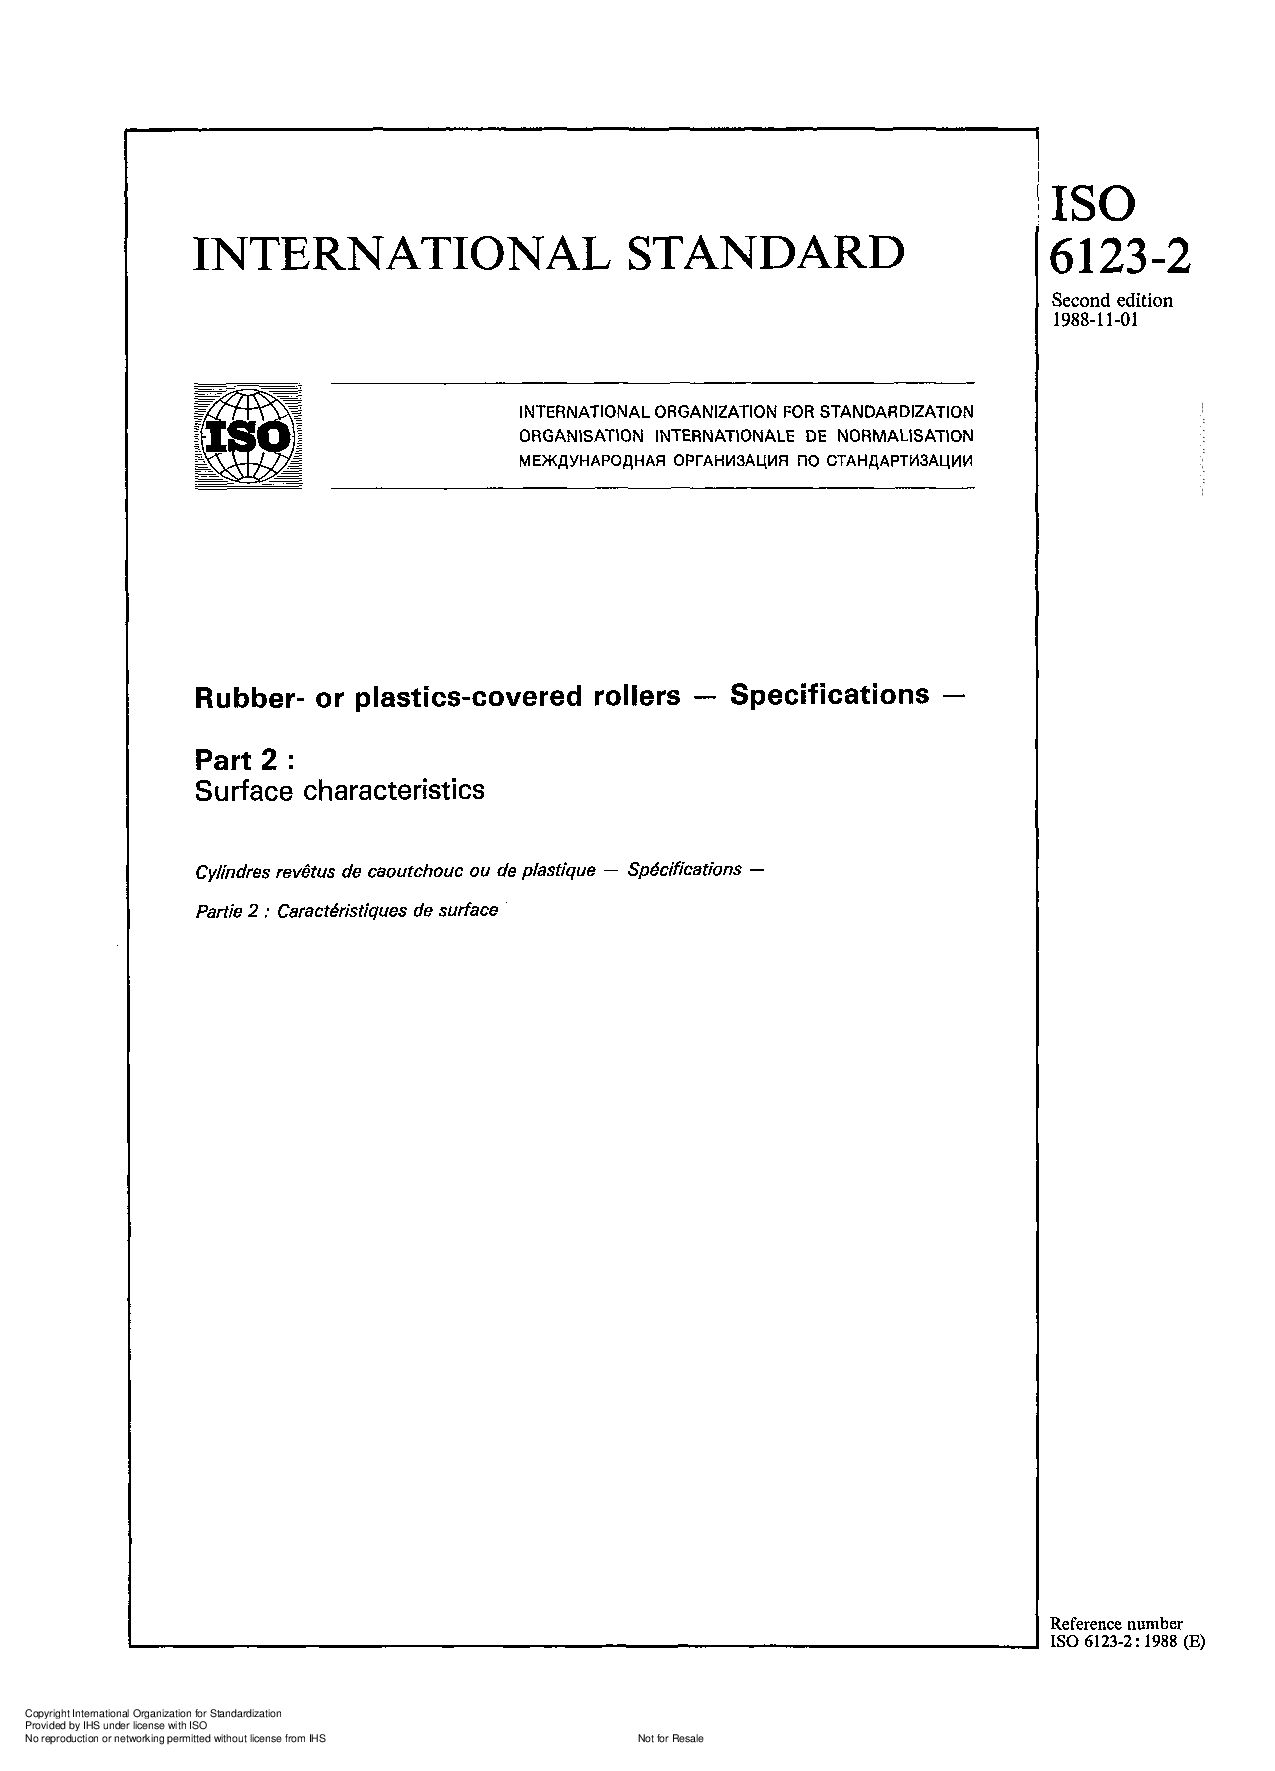 ISO 6123-2:1988封面图